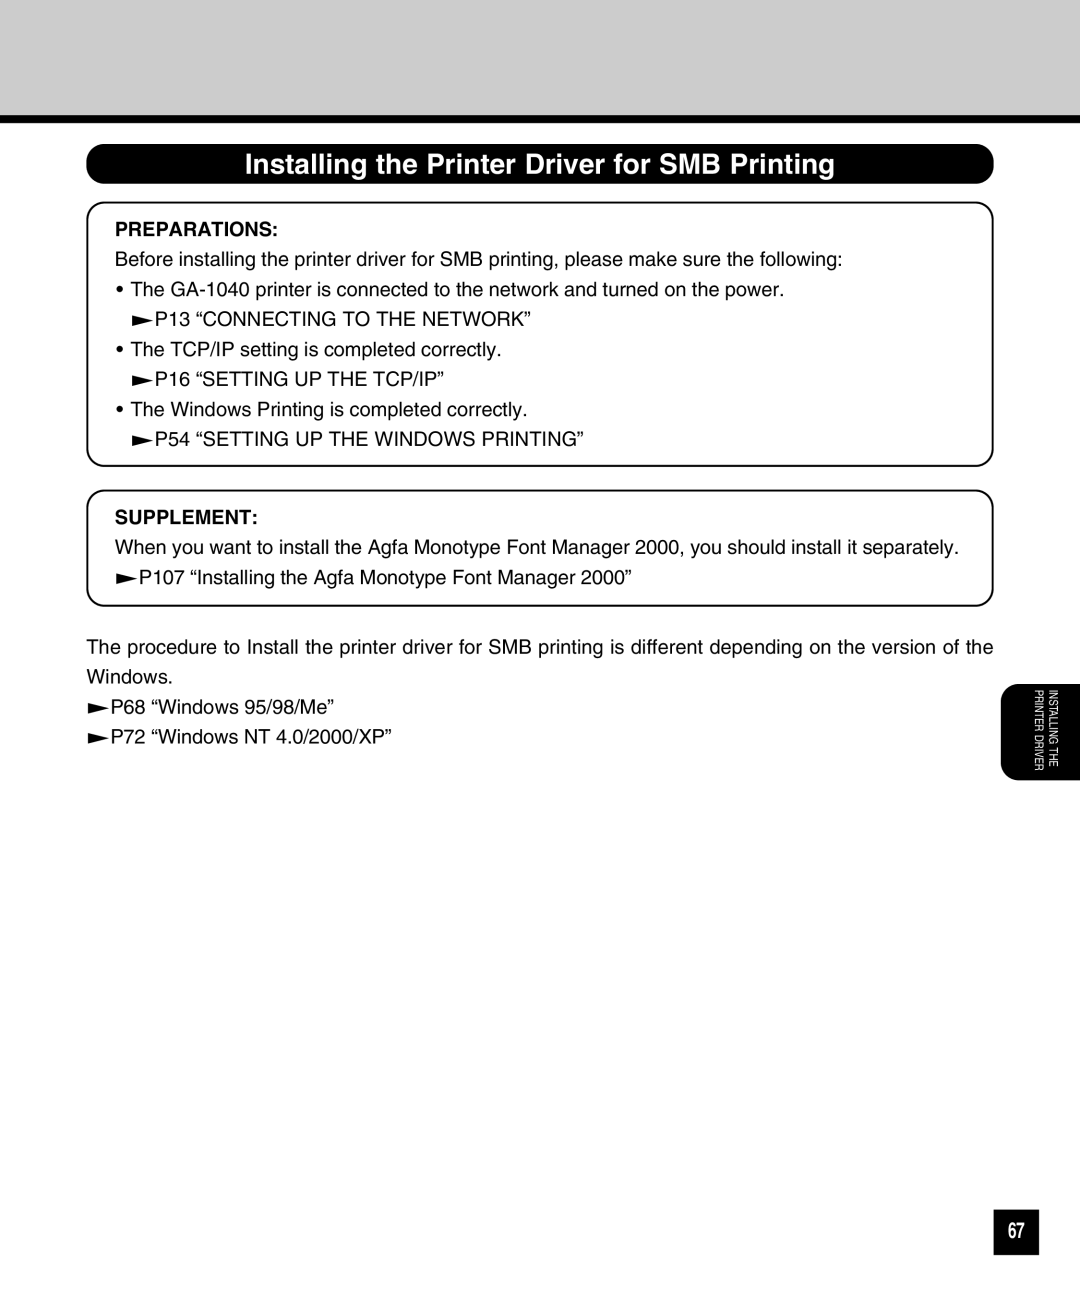 Toshiba GA-1040 manual Installing the Printer Driver for SMB Printing, Preparations, Supplement 